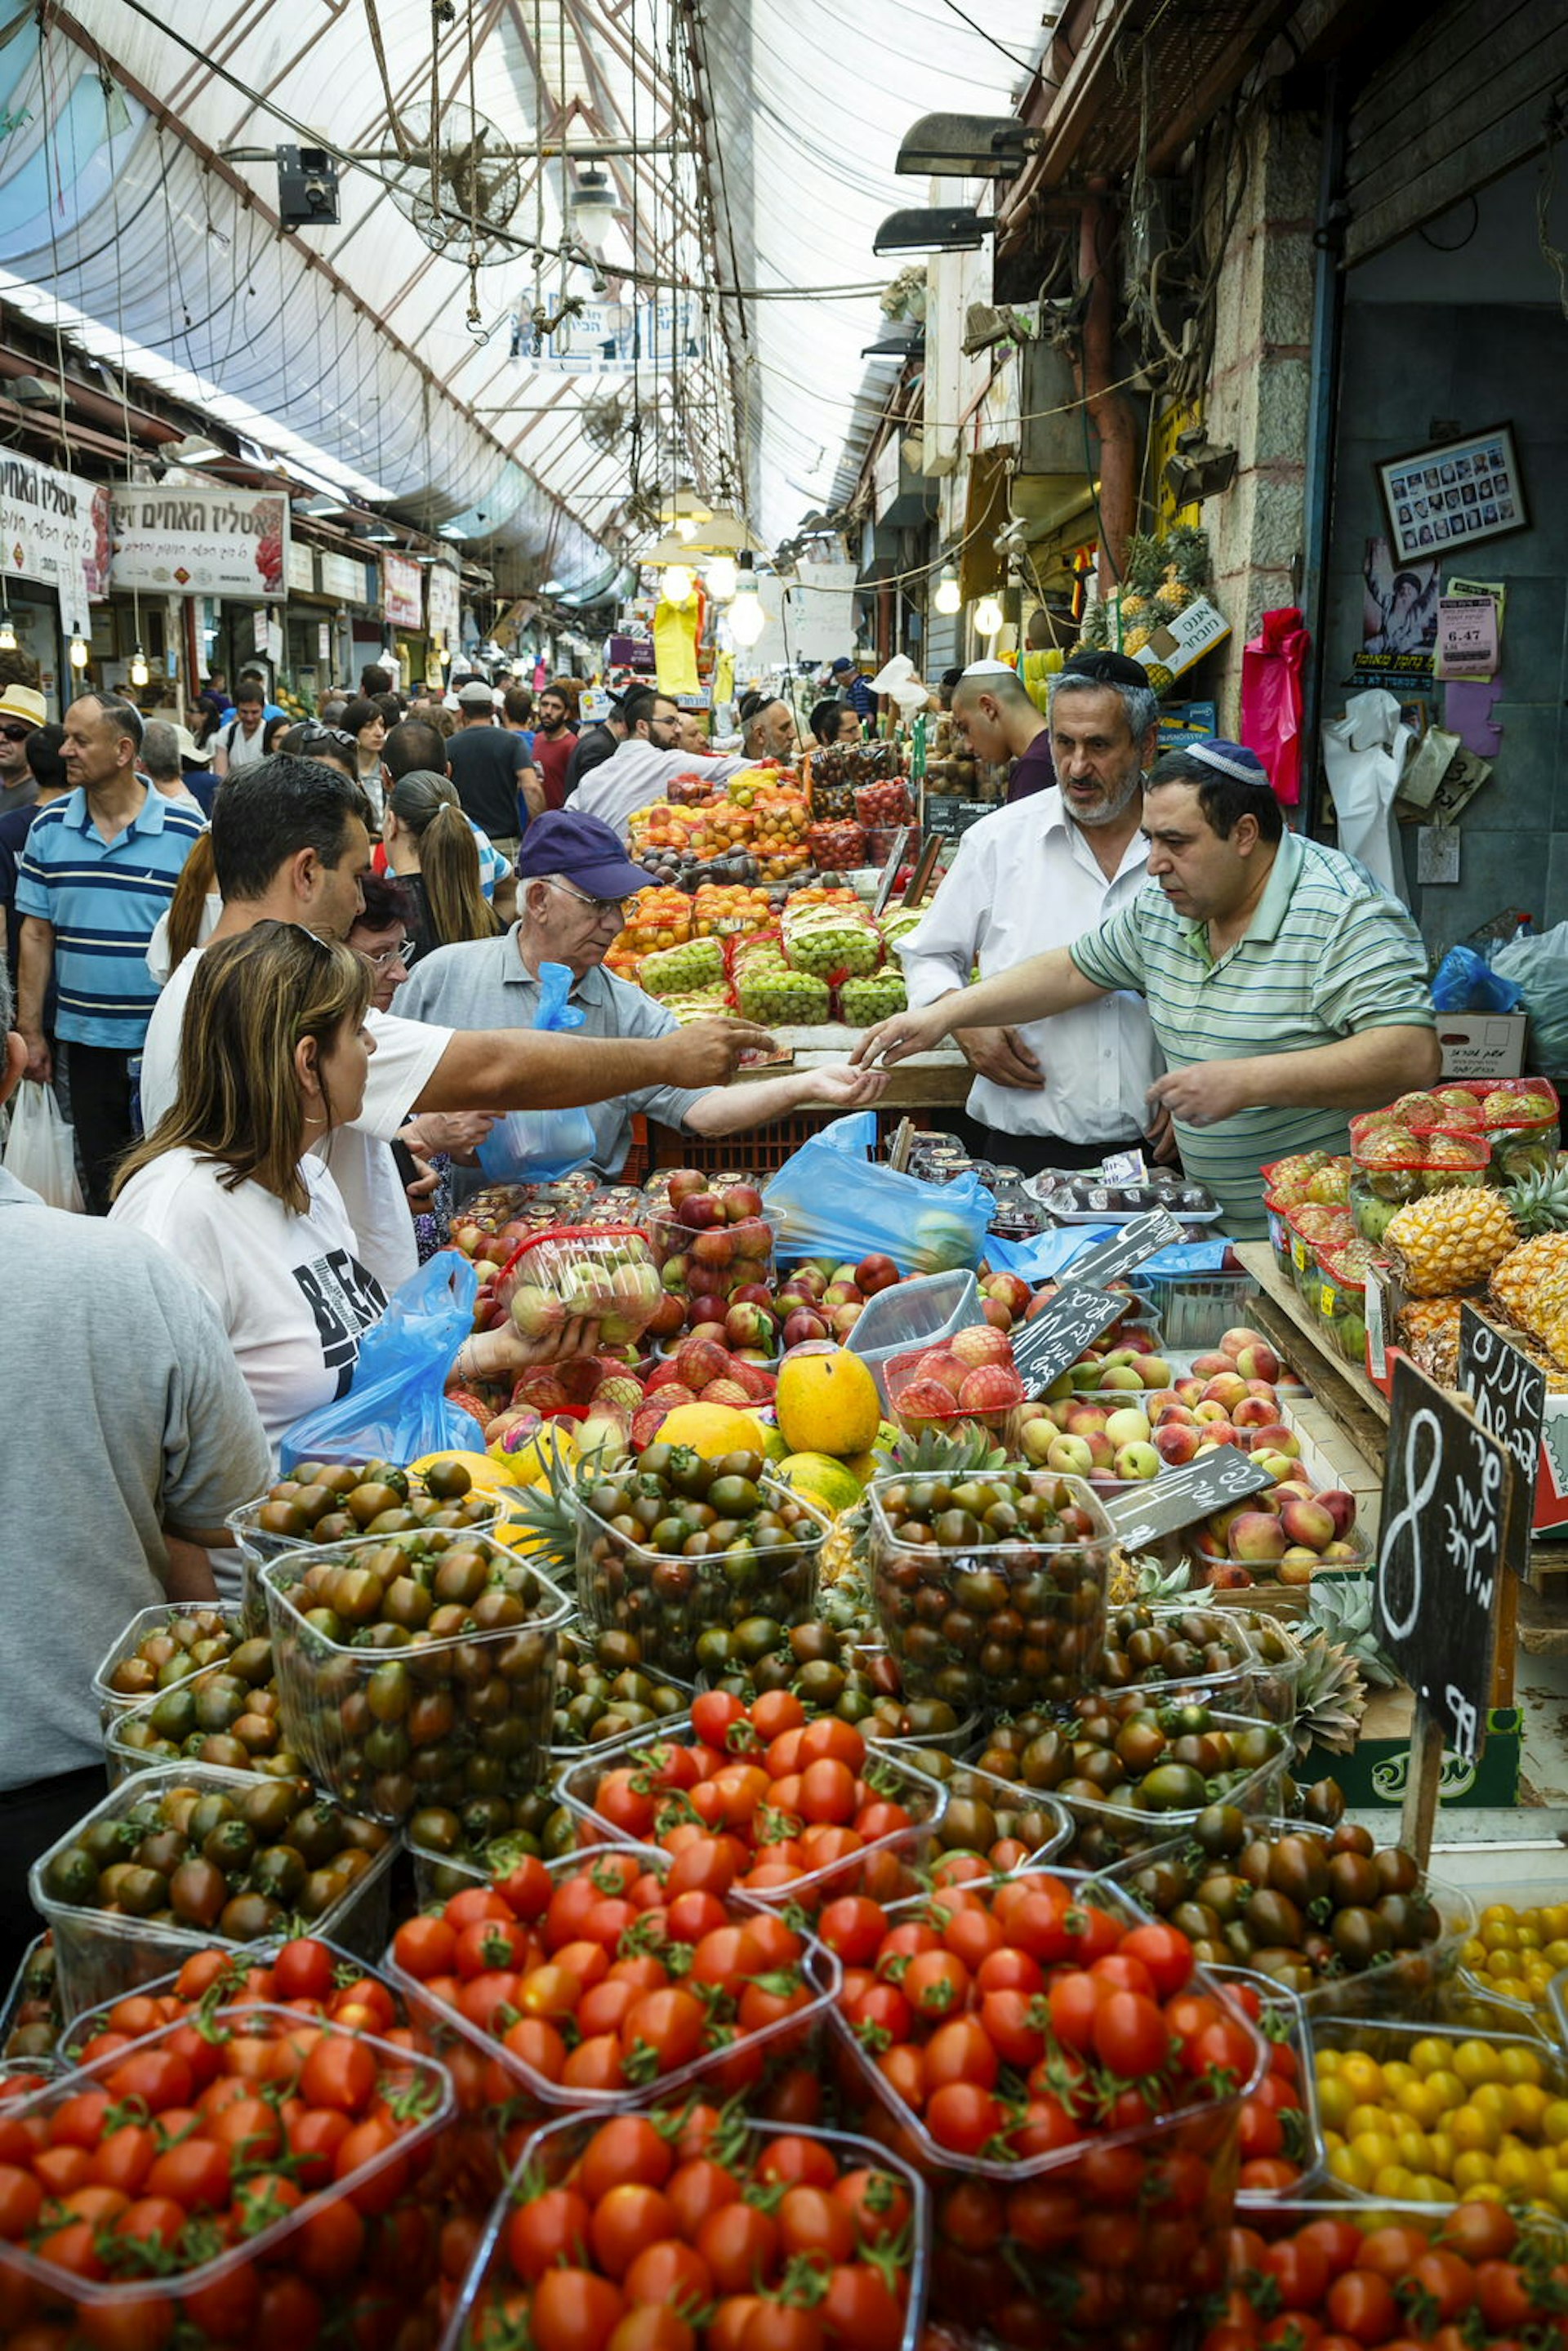 Fruit and vegetable stalls at Jerusalem's Mahane Yehuda Market. Image by Yadid Levy / robertharding / Getty